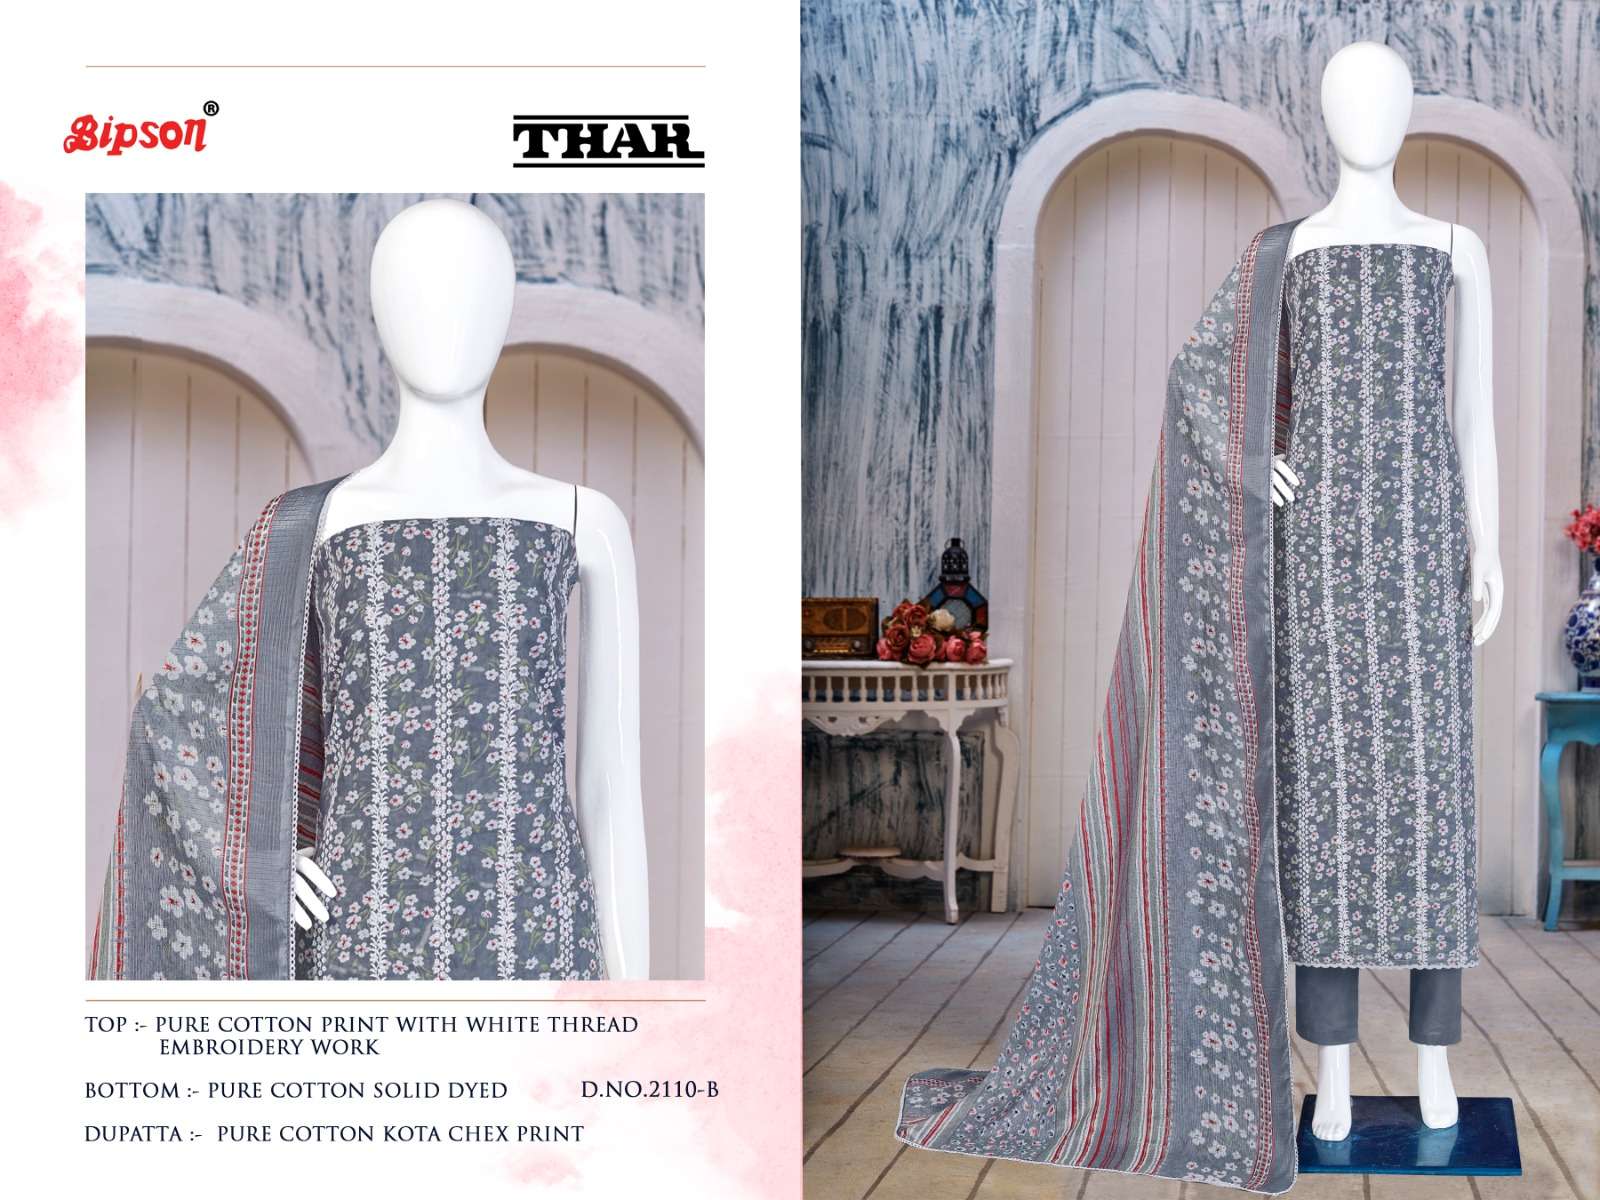 bipson prints thar 2110 series pure cotton designer salwar kameez catalogue collection 2023